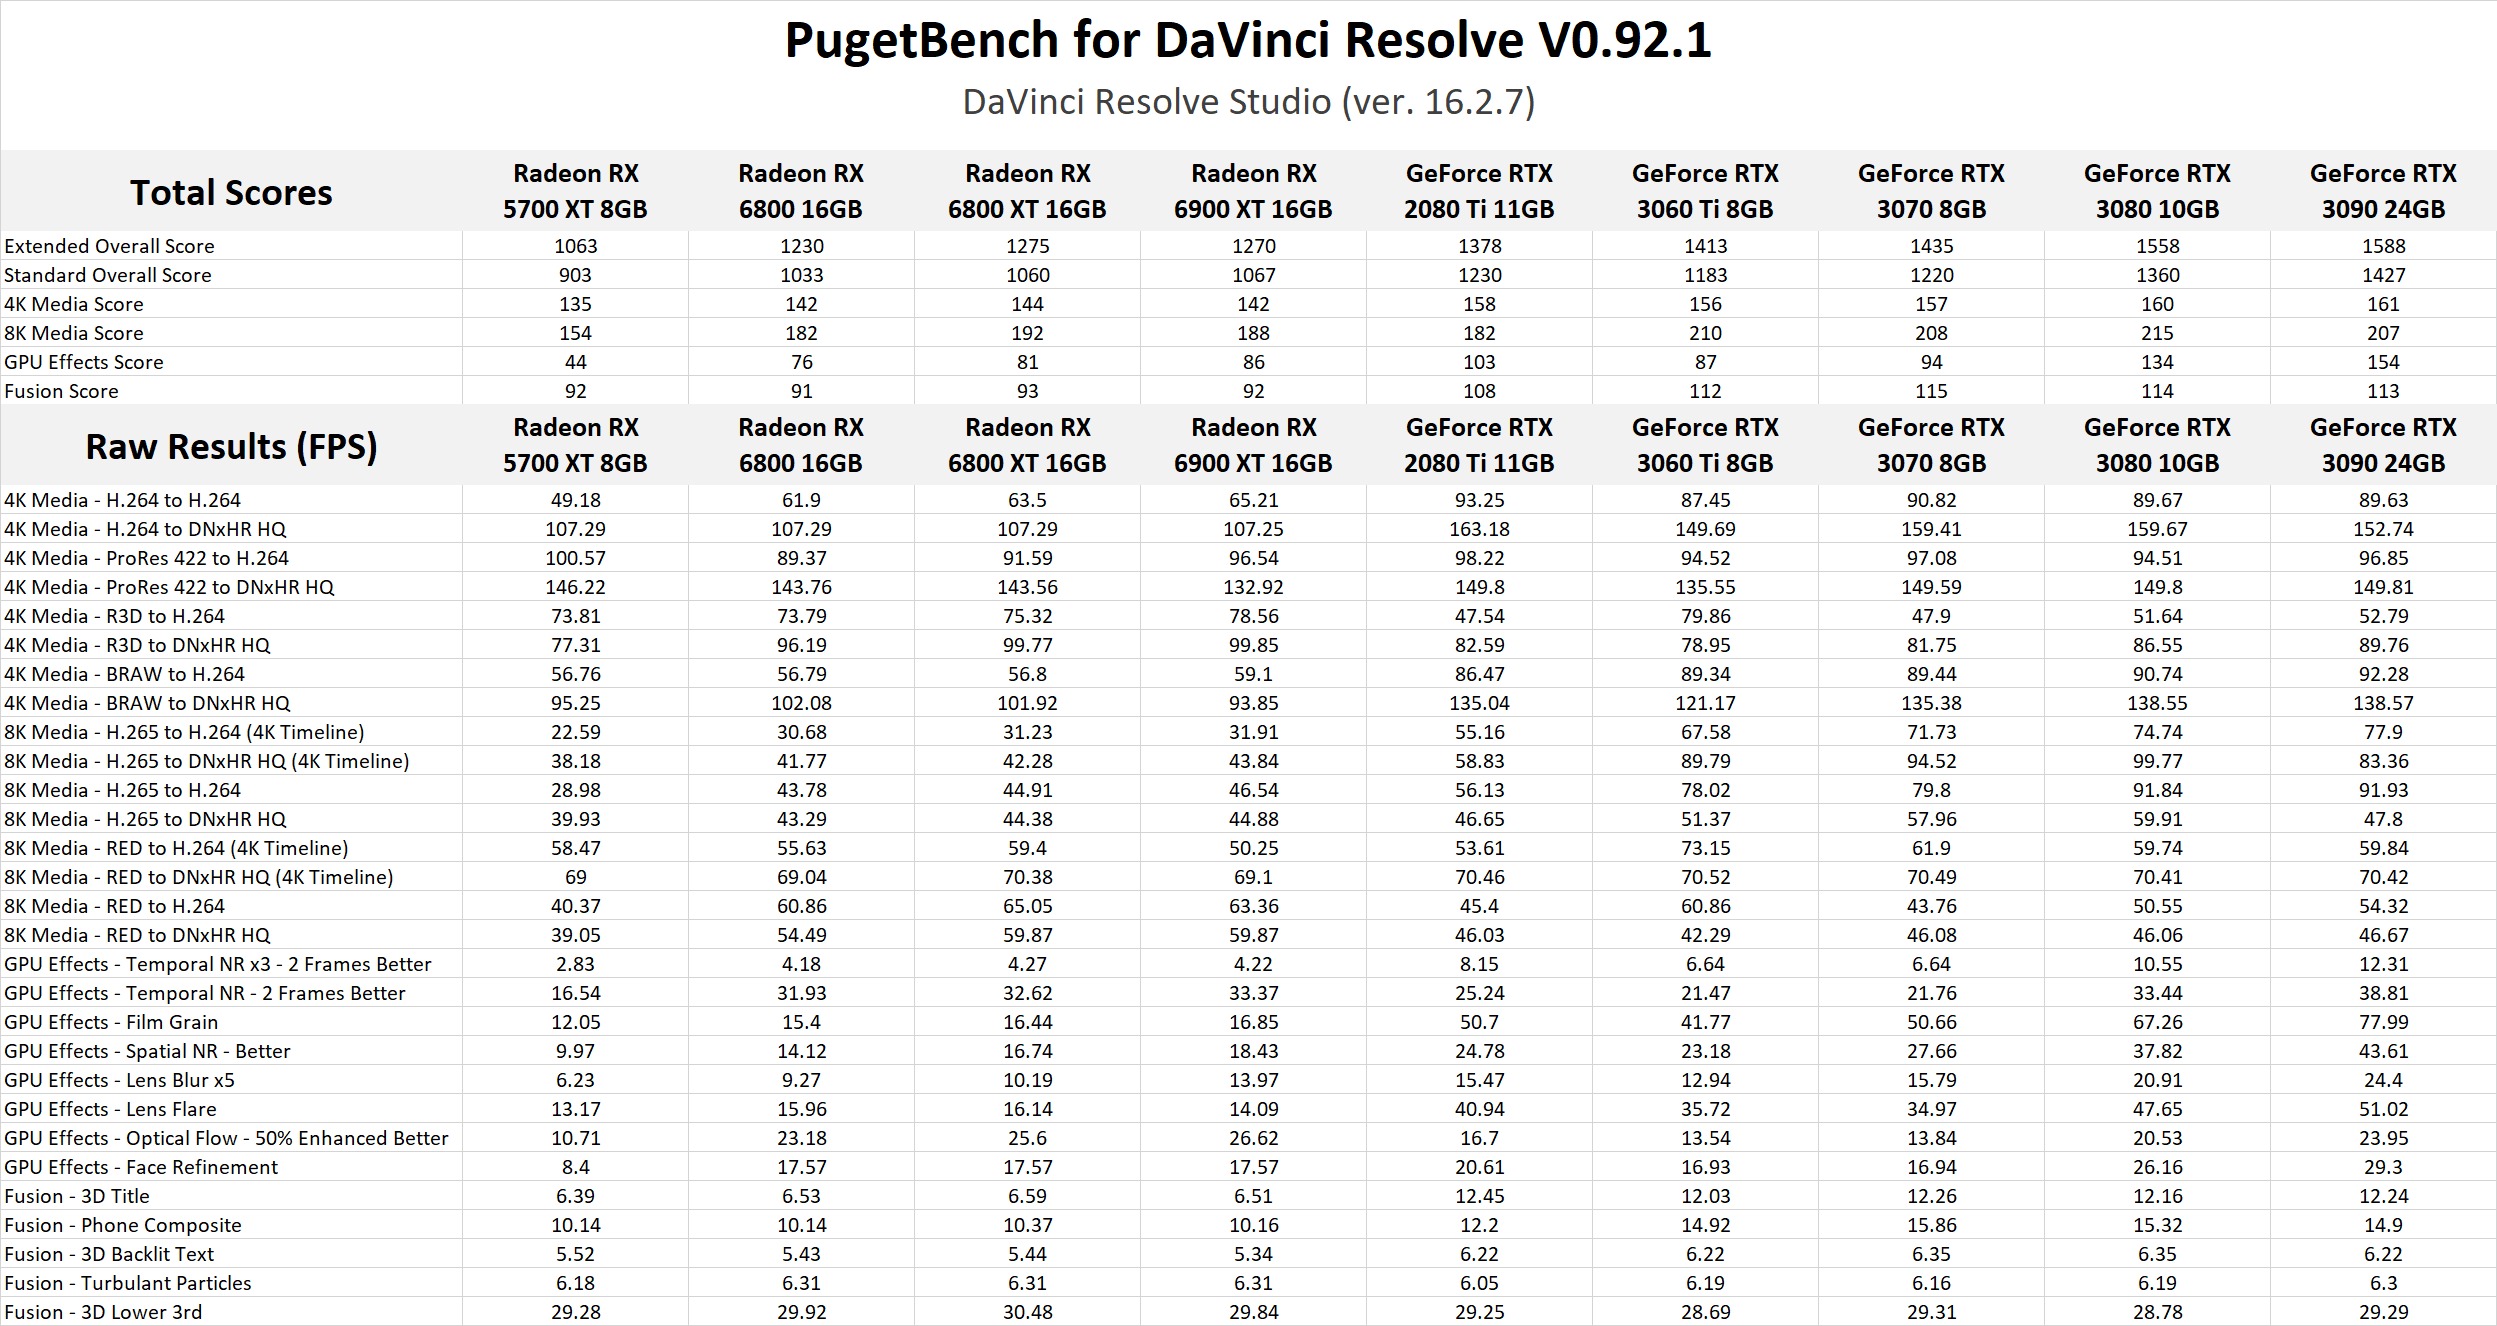 AMD Radeon RX 6900 XT 16GB DaVinci Resolve Studio GPU Performance Benchmark